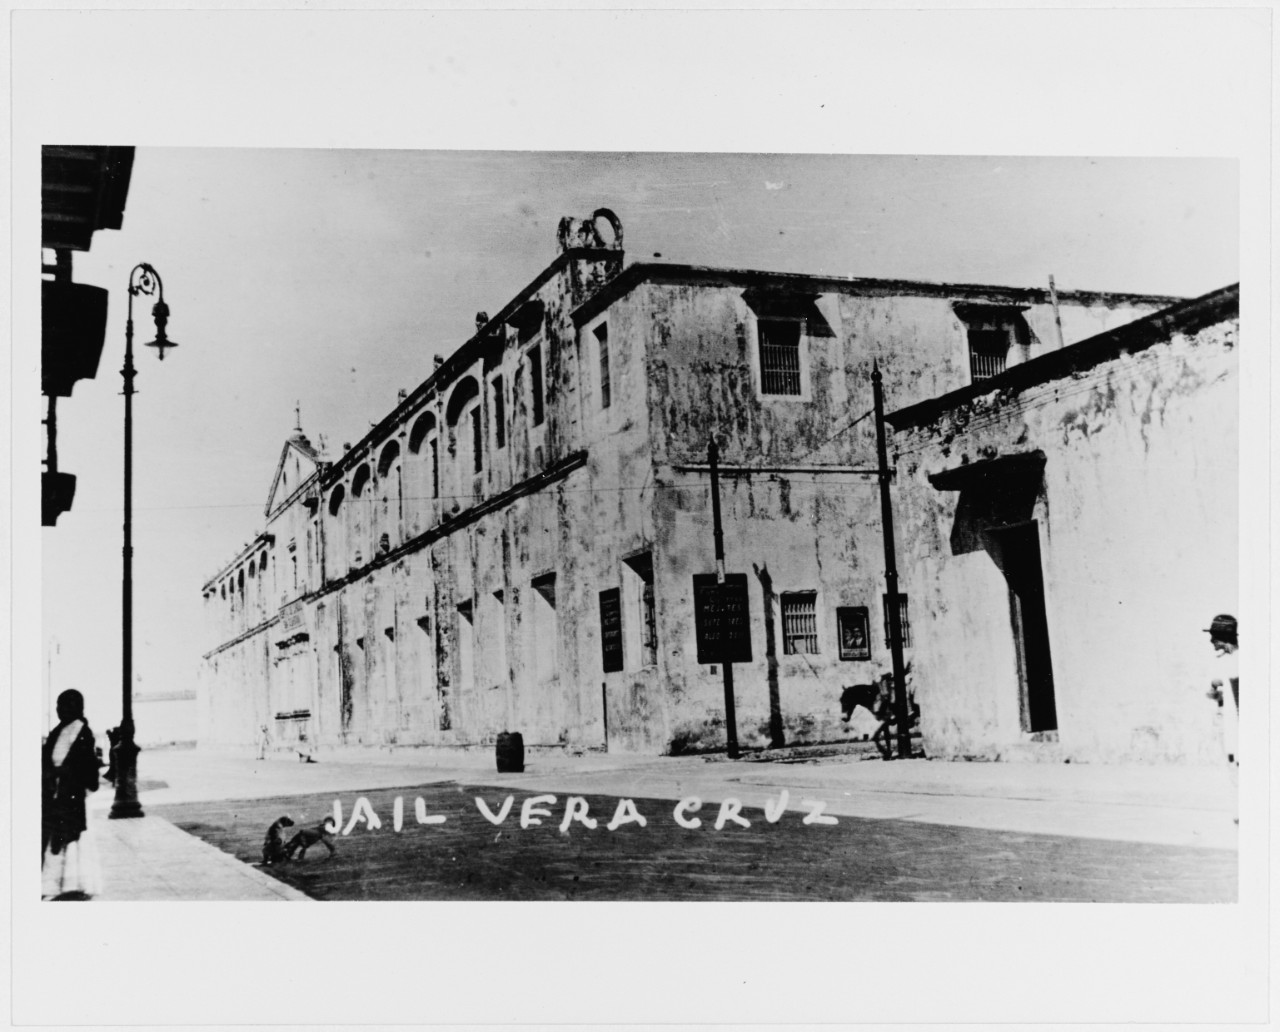 Vera Cruz, Mexico, 1914